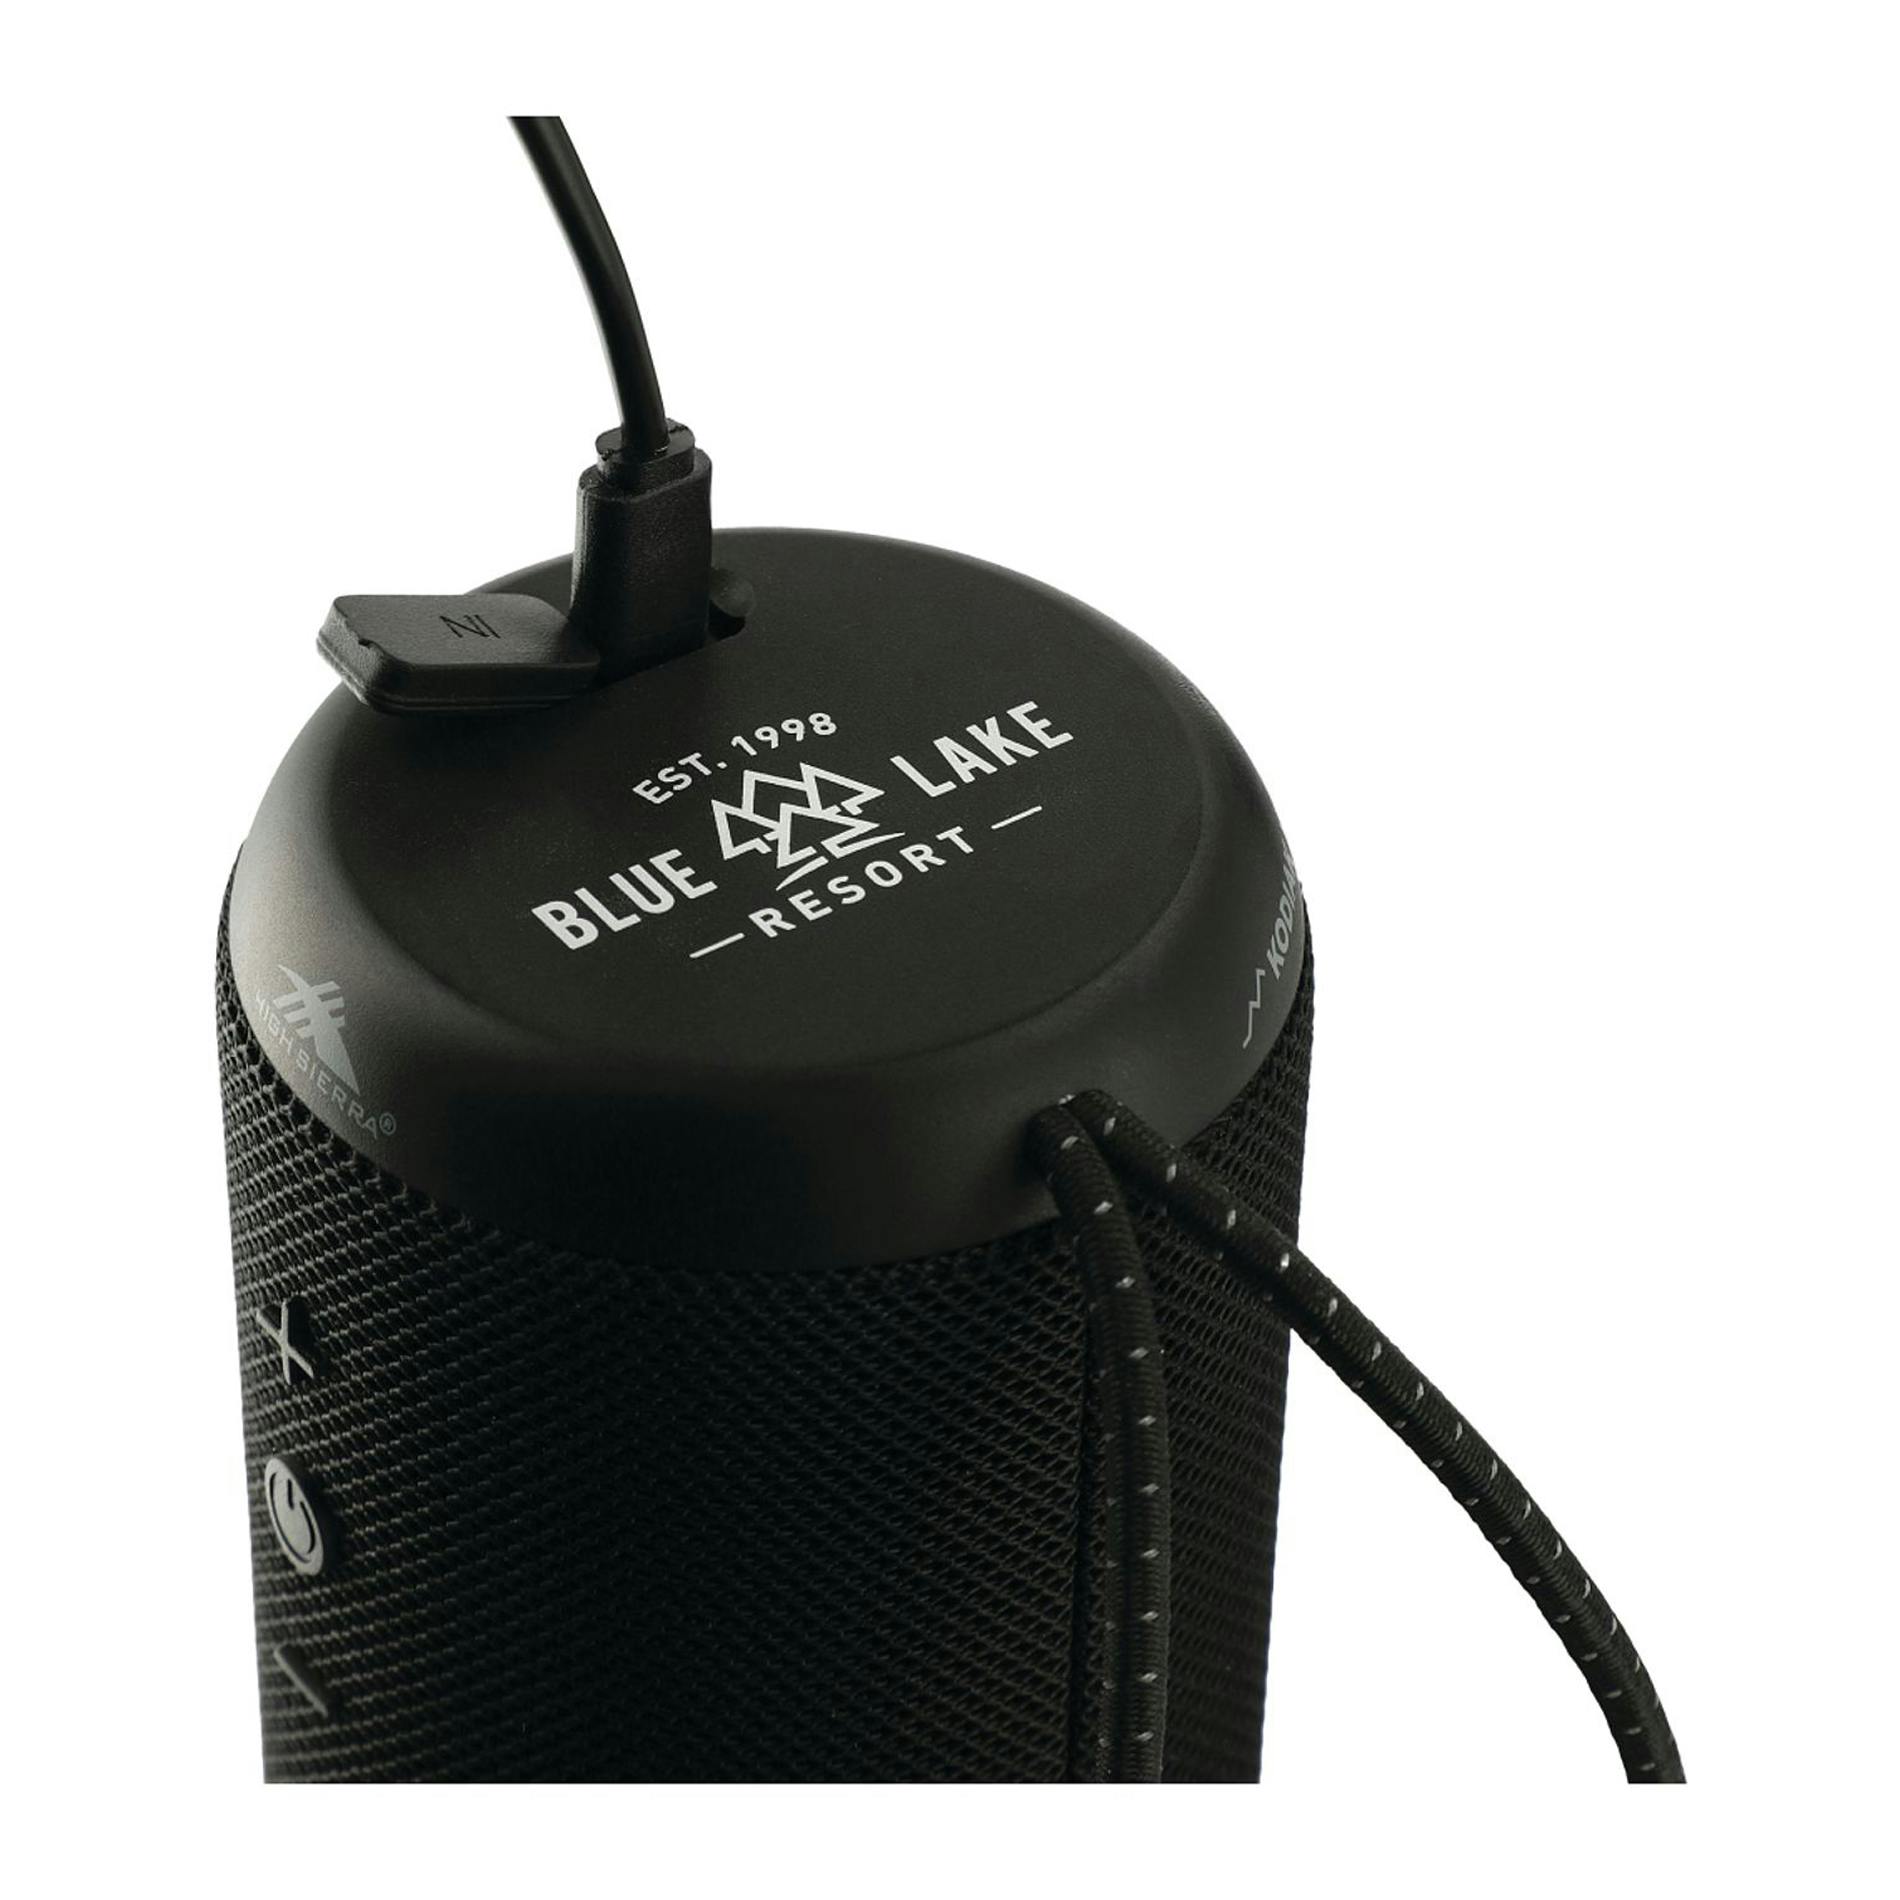 High Sierra Kodiak IPX7 Outdoor Bluetooth Speaker - additional Image 1